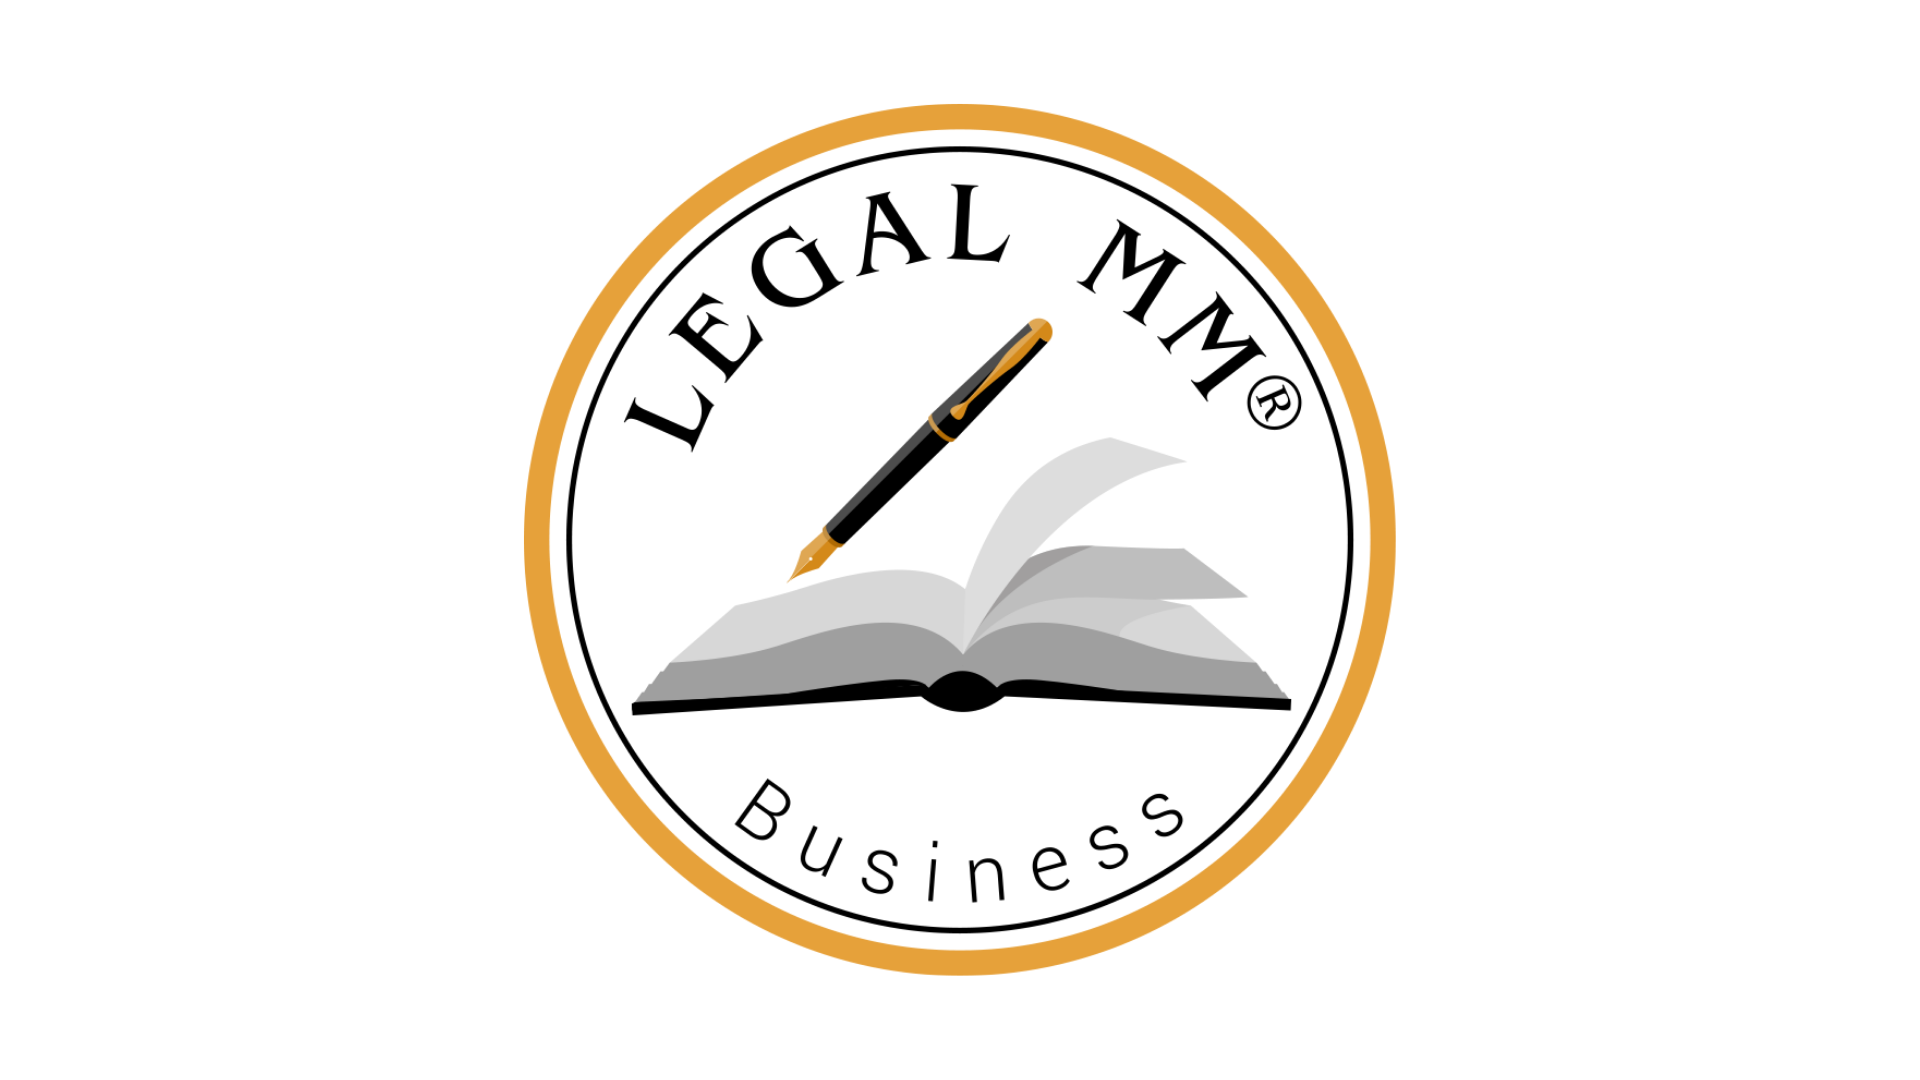 Interviu cu Mădălina Scarlat, expert contabil la firma Legal MM Business